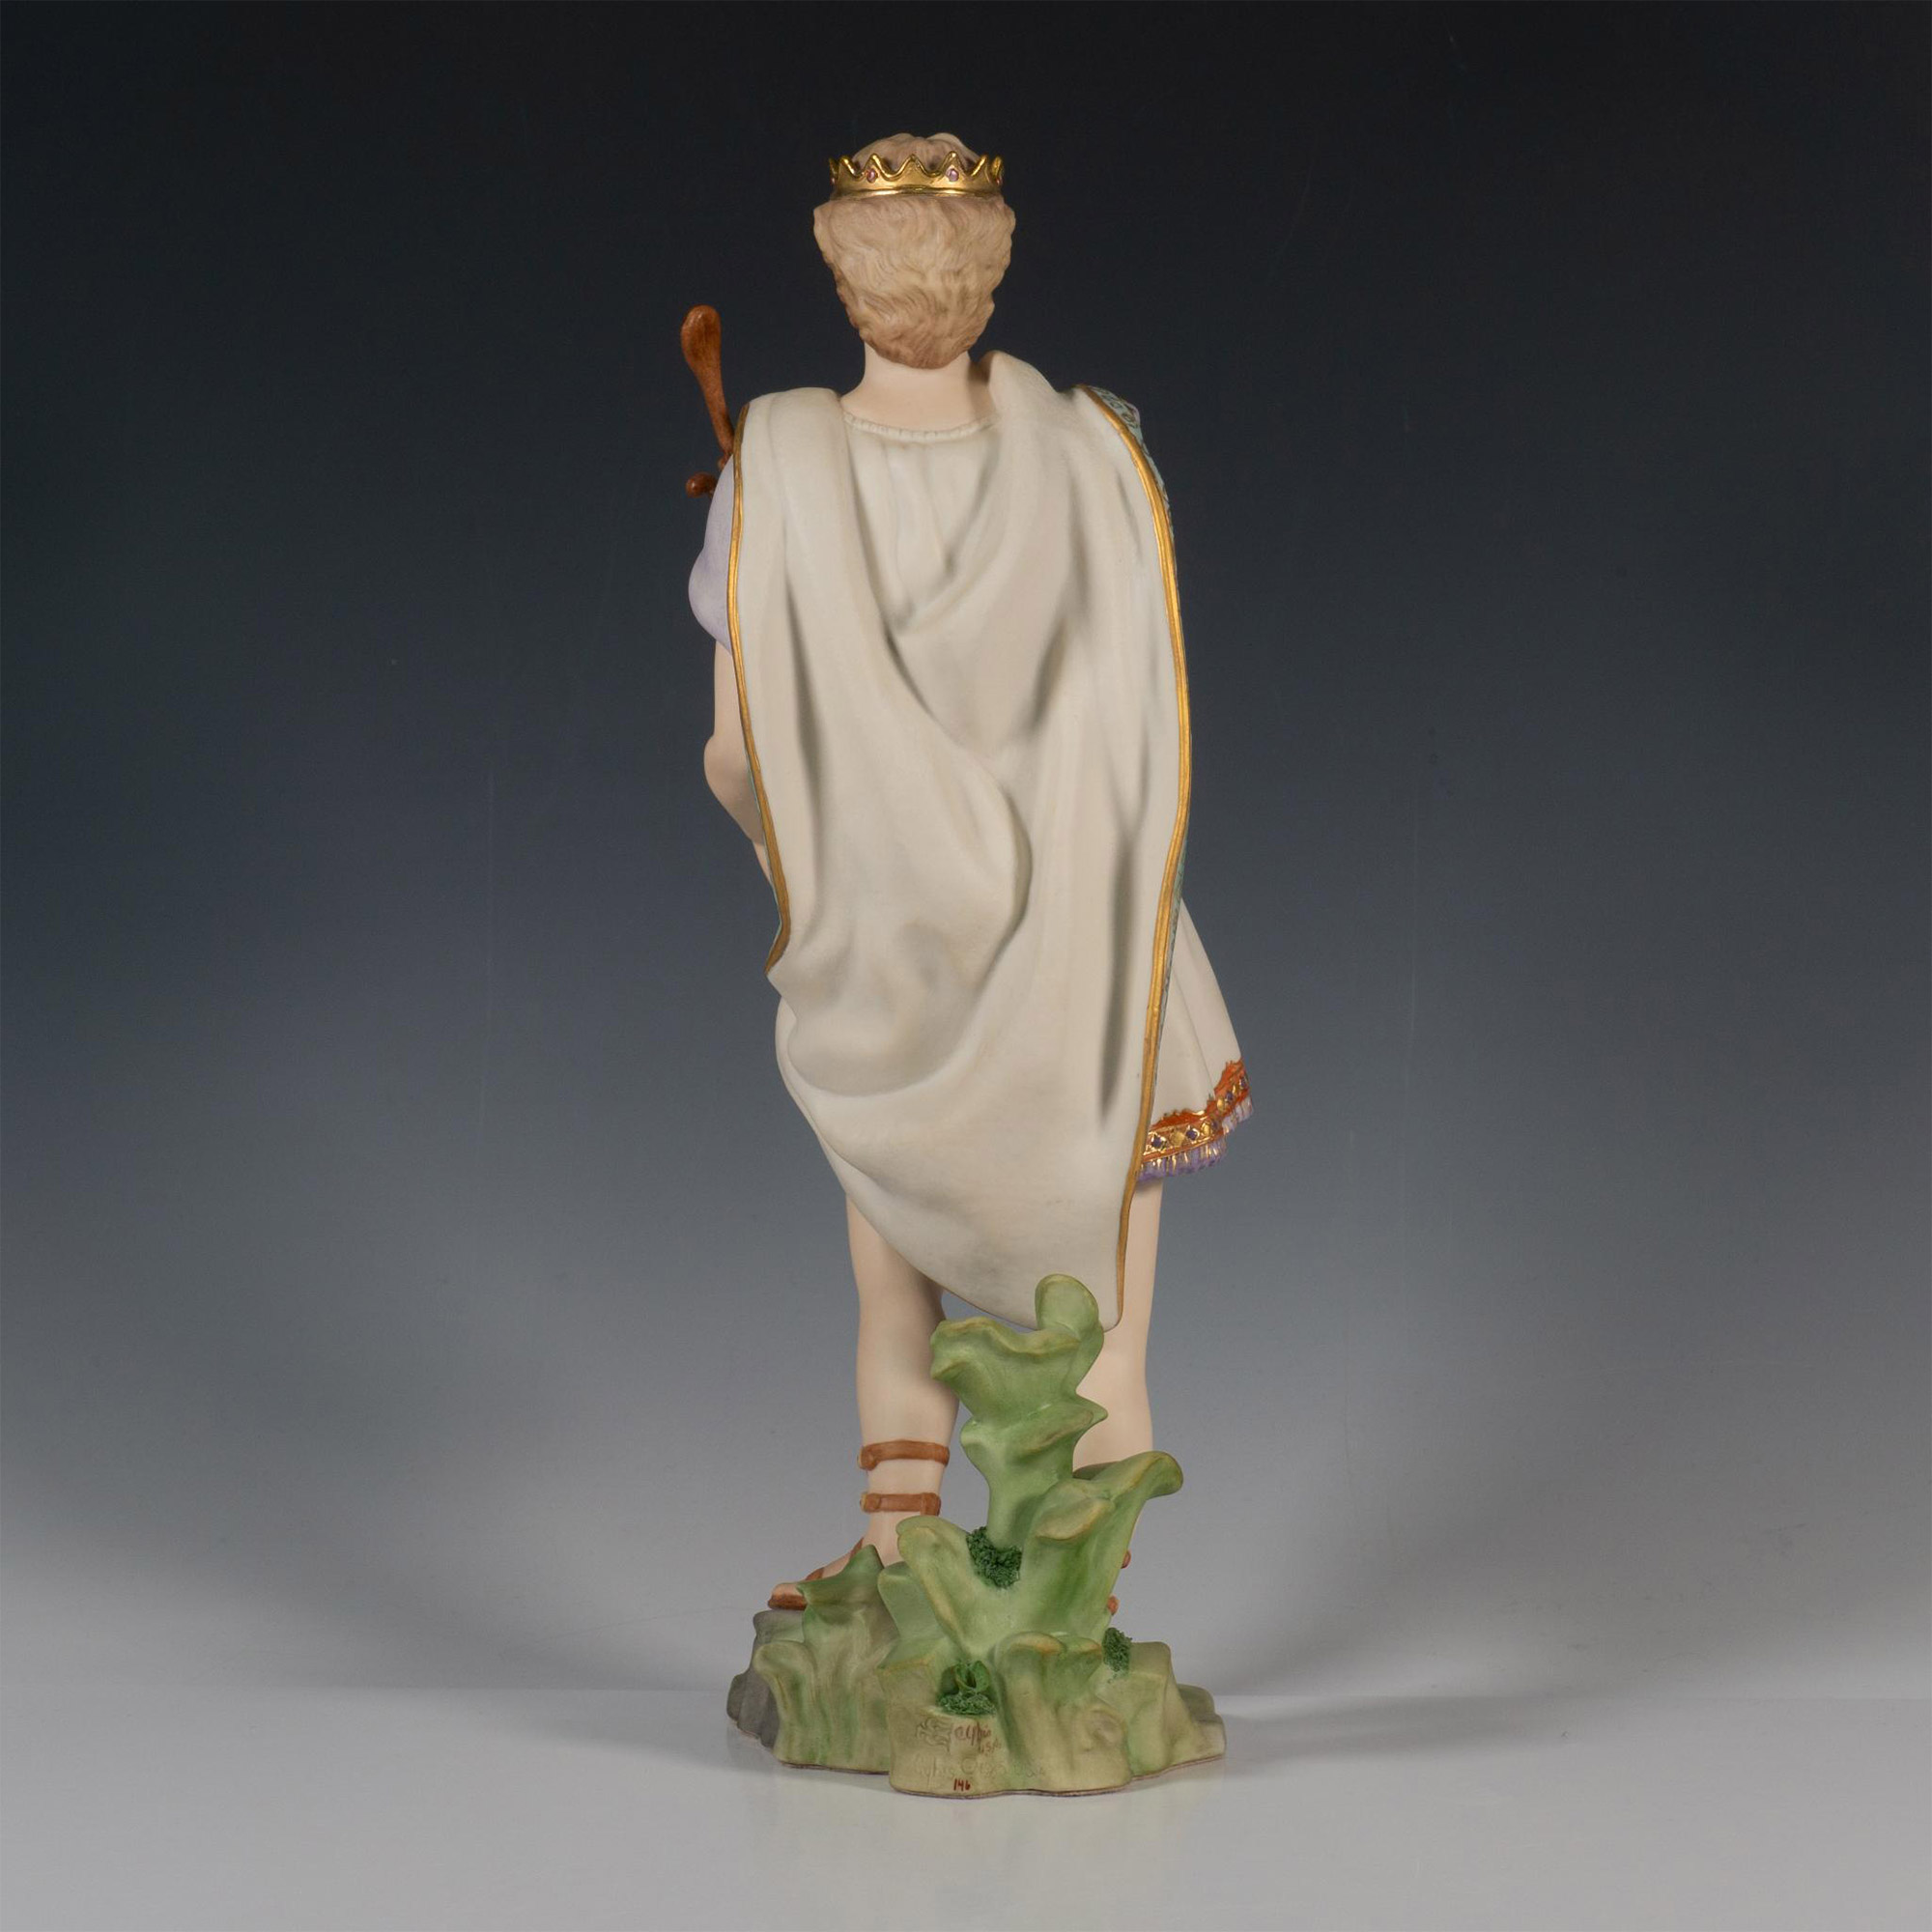 Cybis Limited Edition Figurine, King David - Image 4 of 5